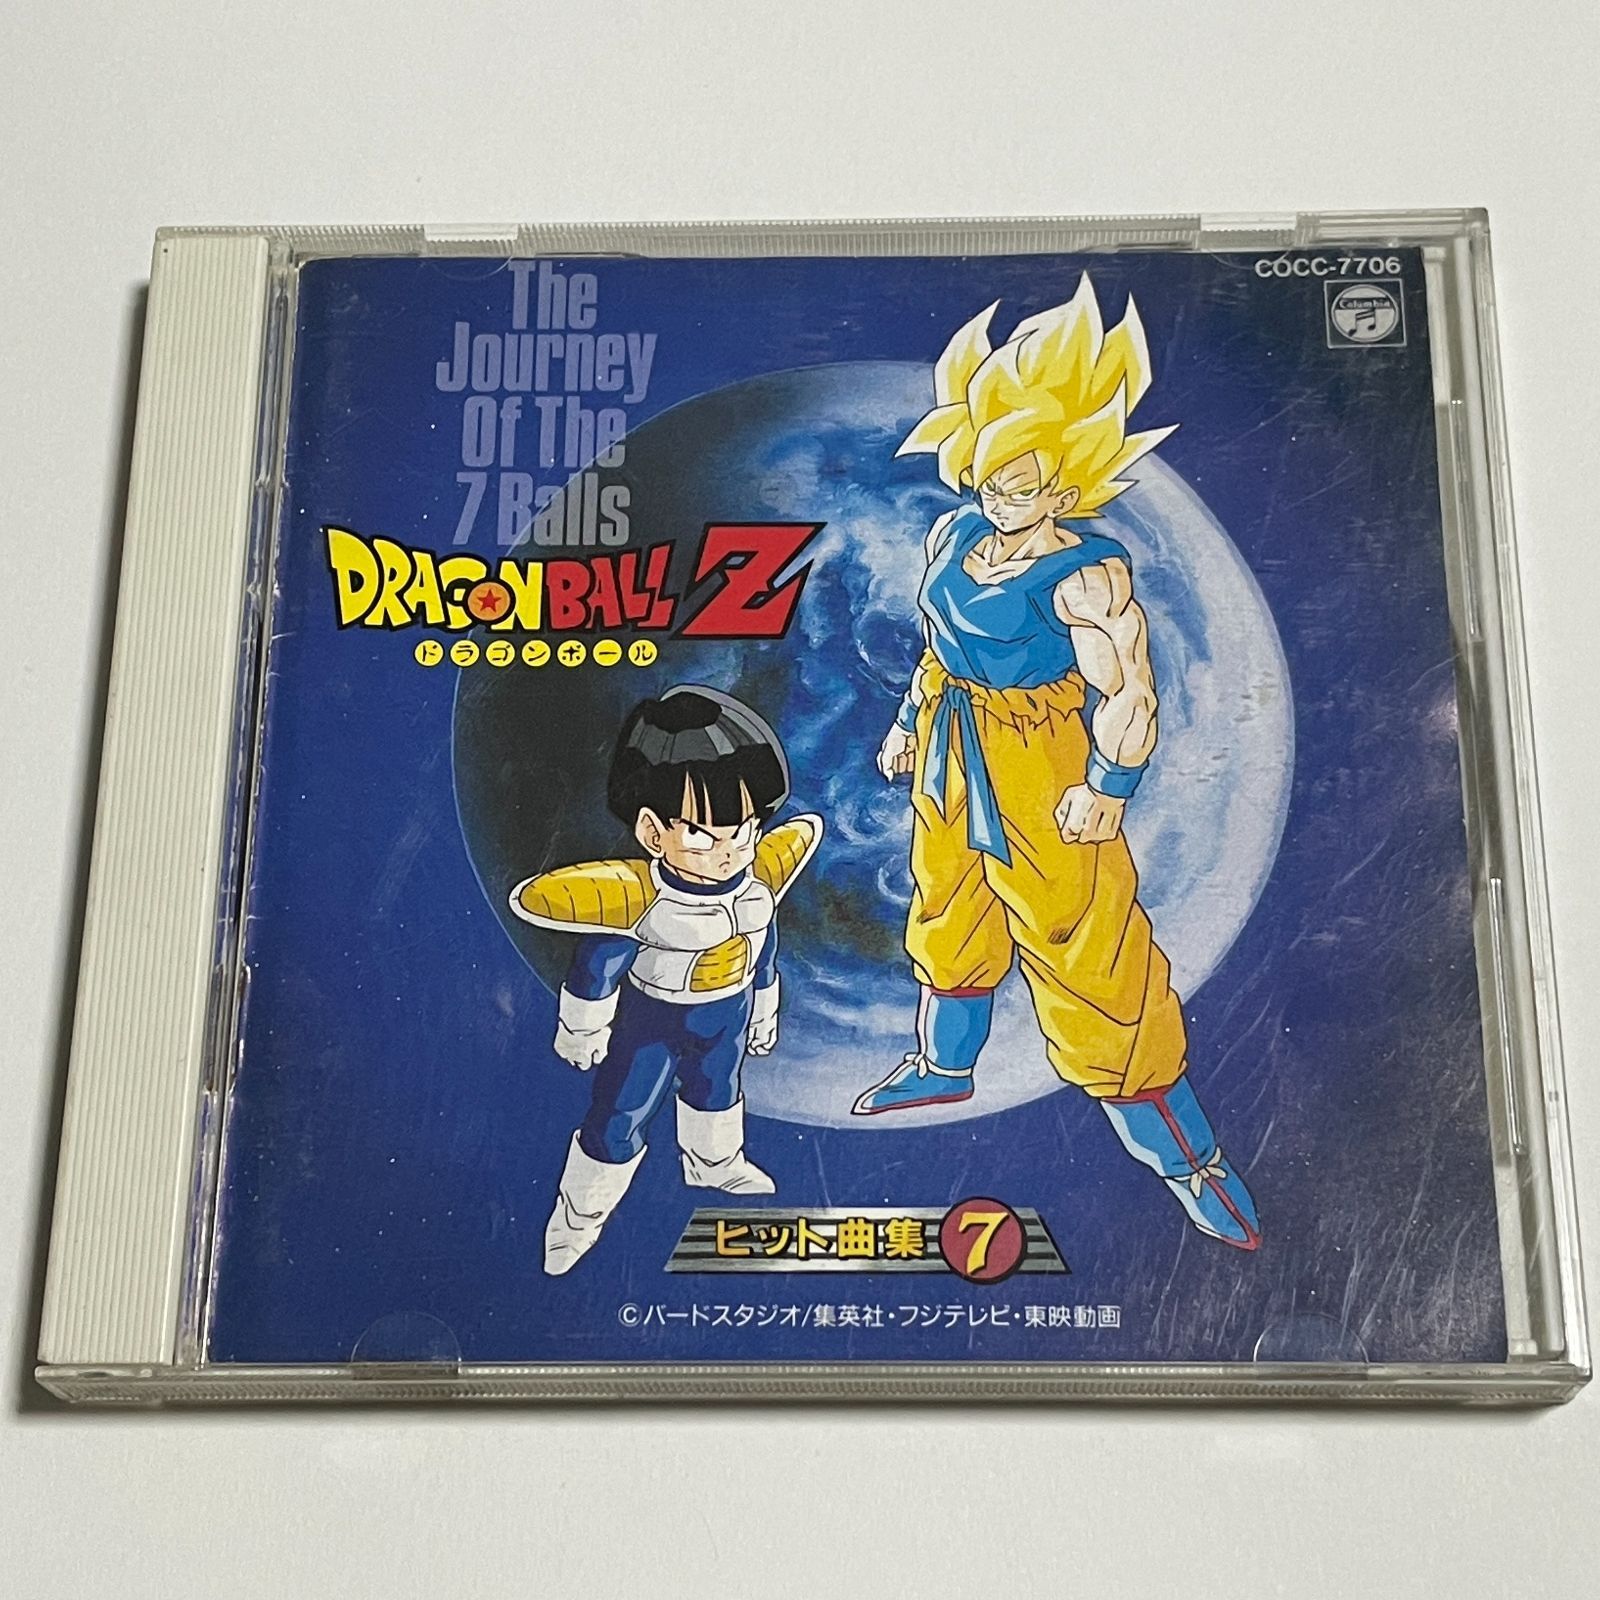 CD「ドラゴンボールZヒット曲集7」 - アニメ